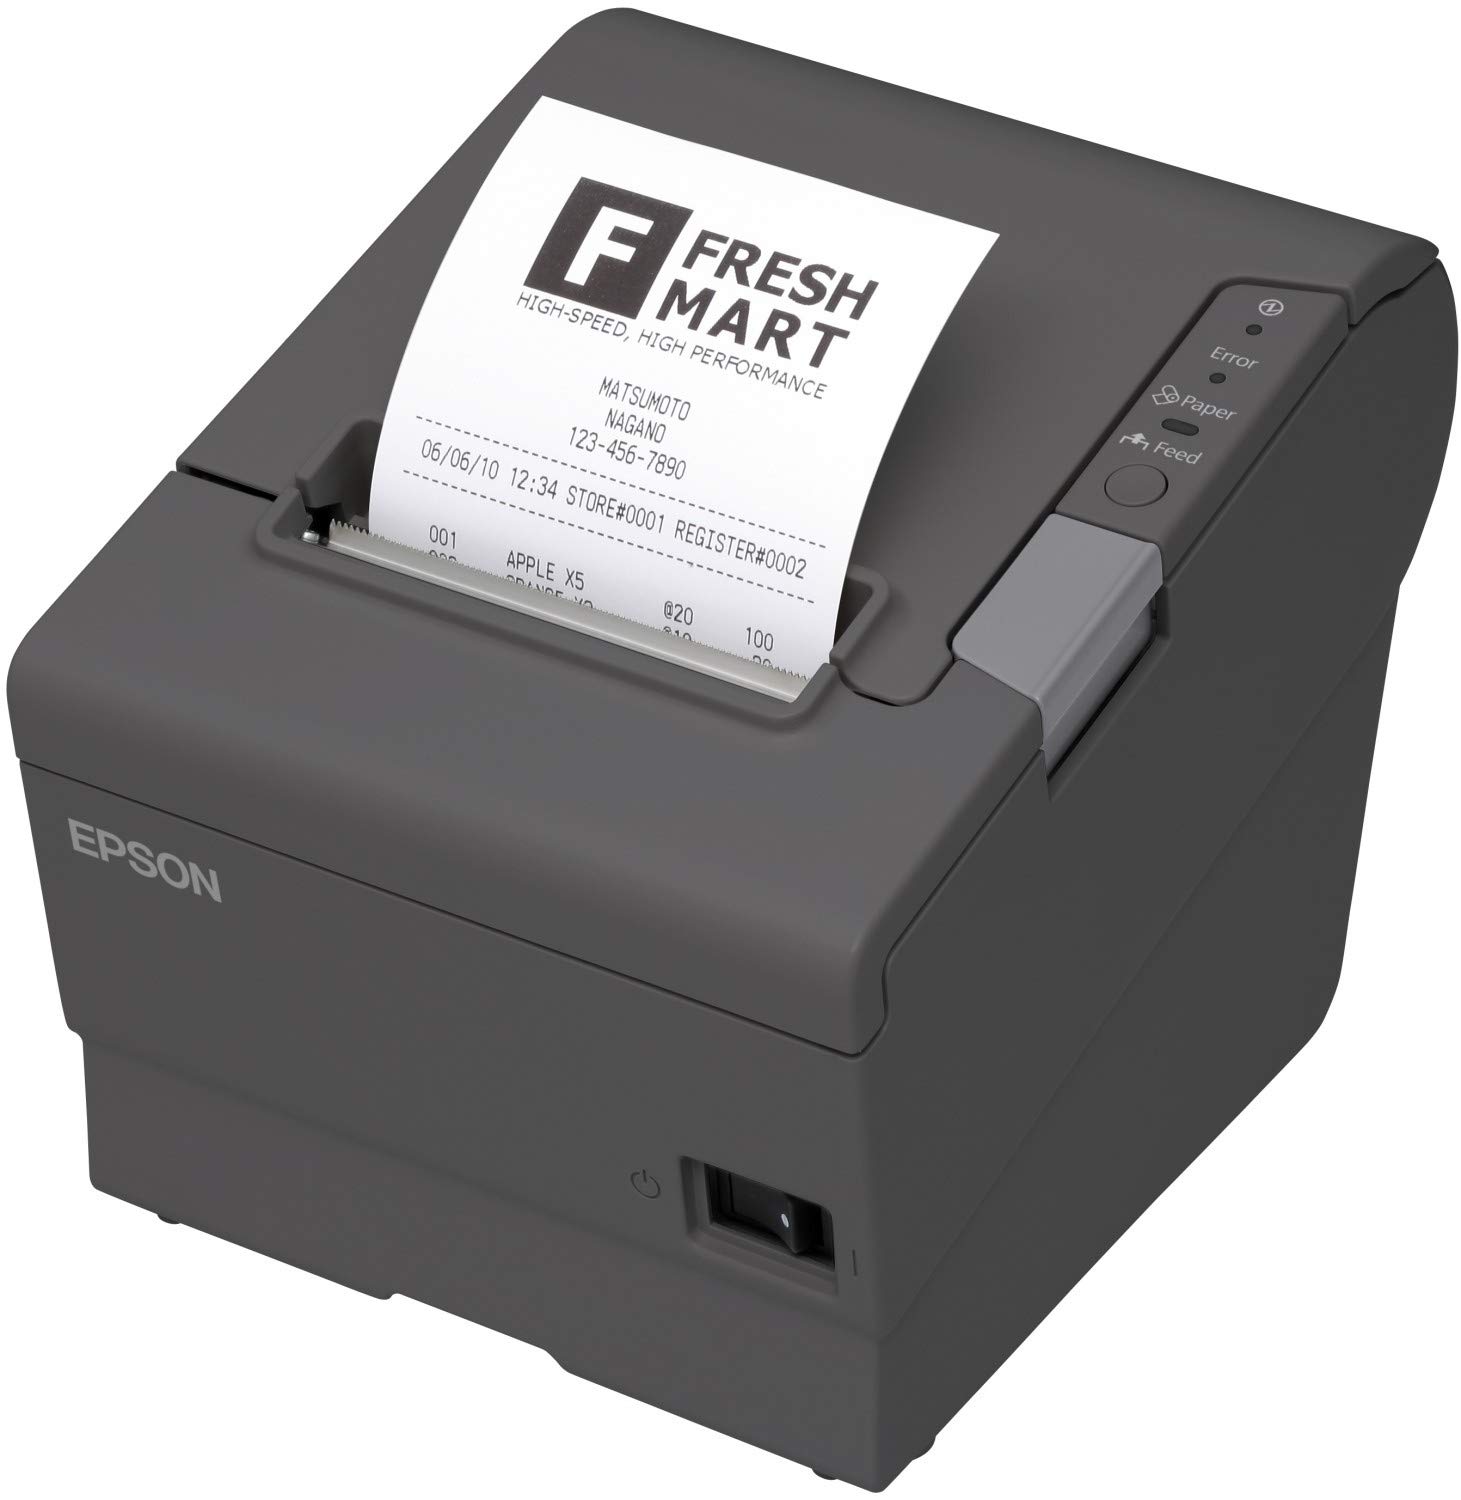 Epson TM-T88V  Stampante per Ricevute USB  Serial, PS, EDG, EU